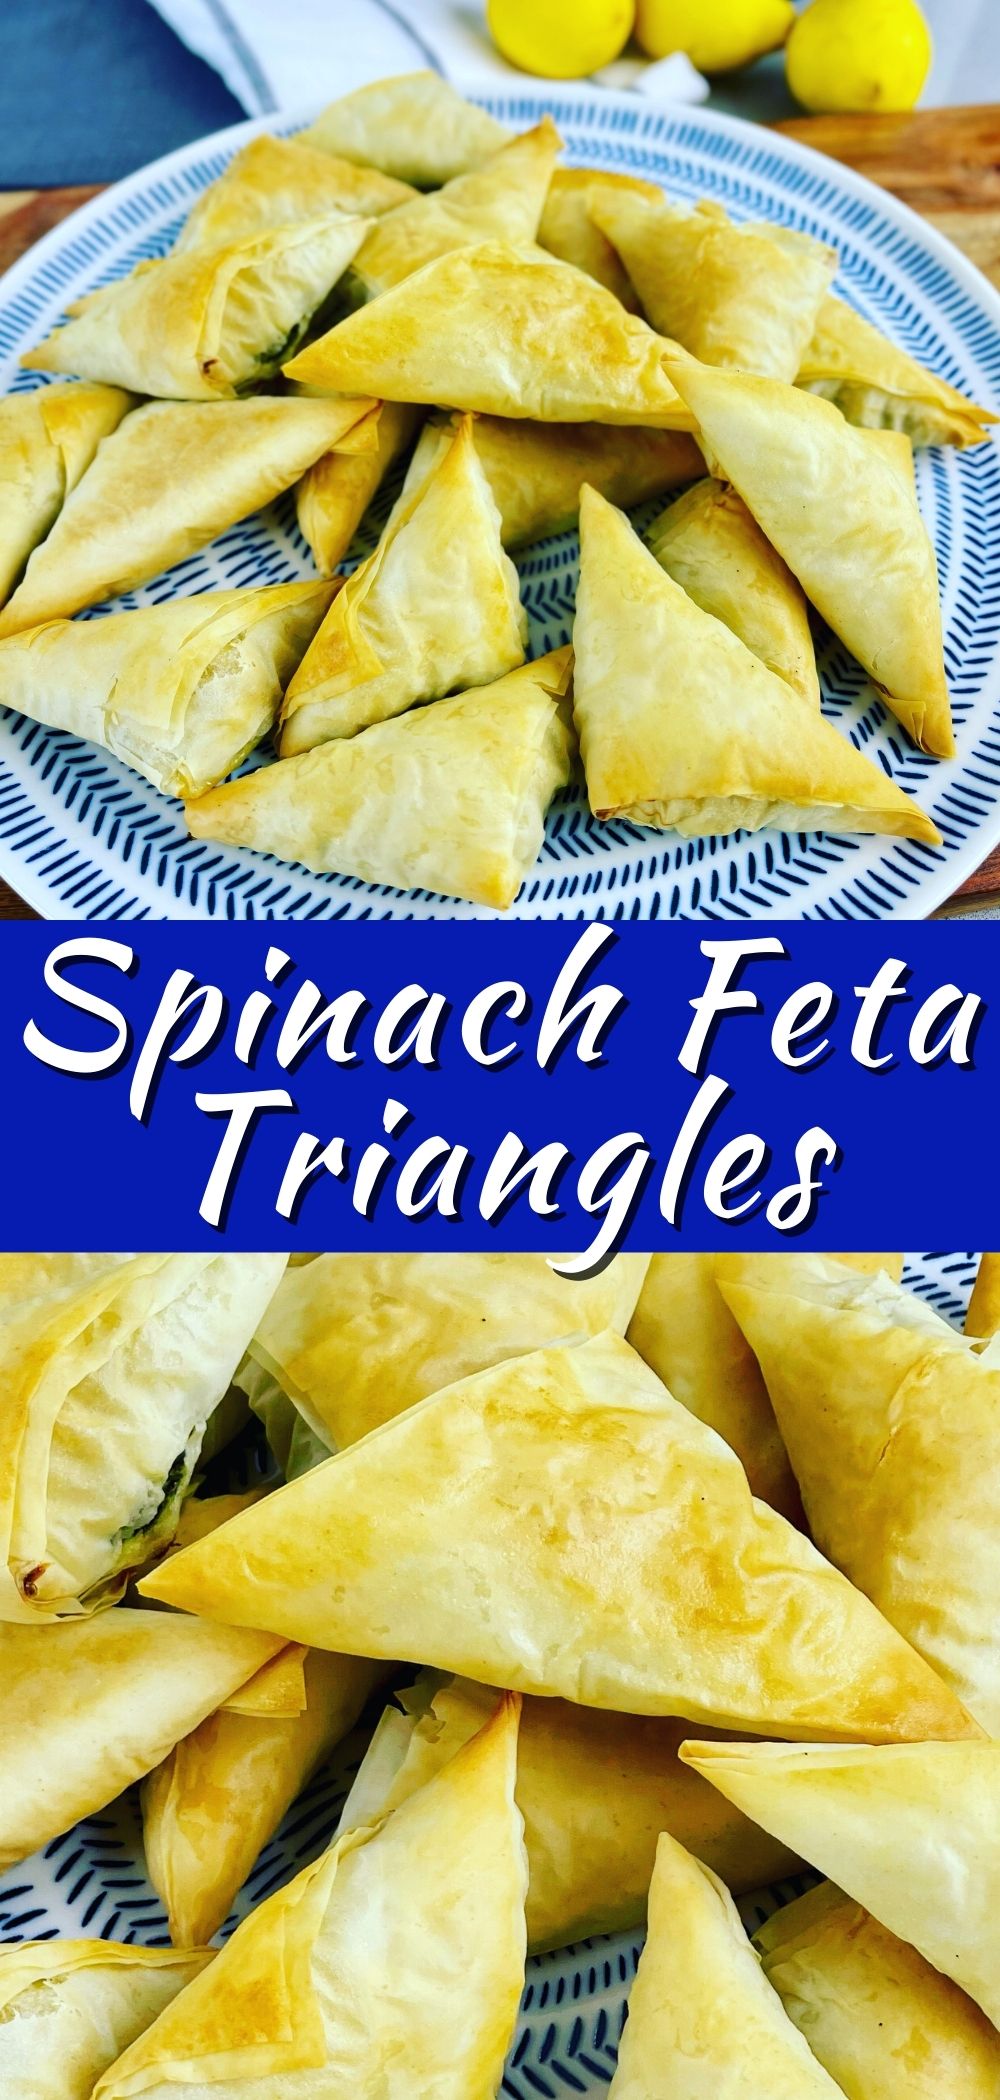 spinach feta triangles platter